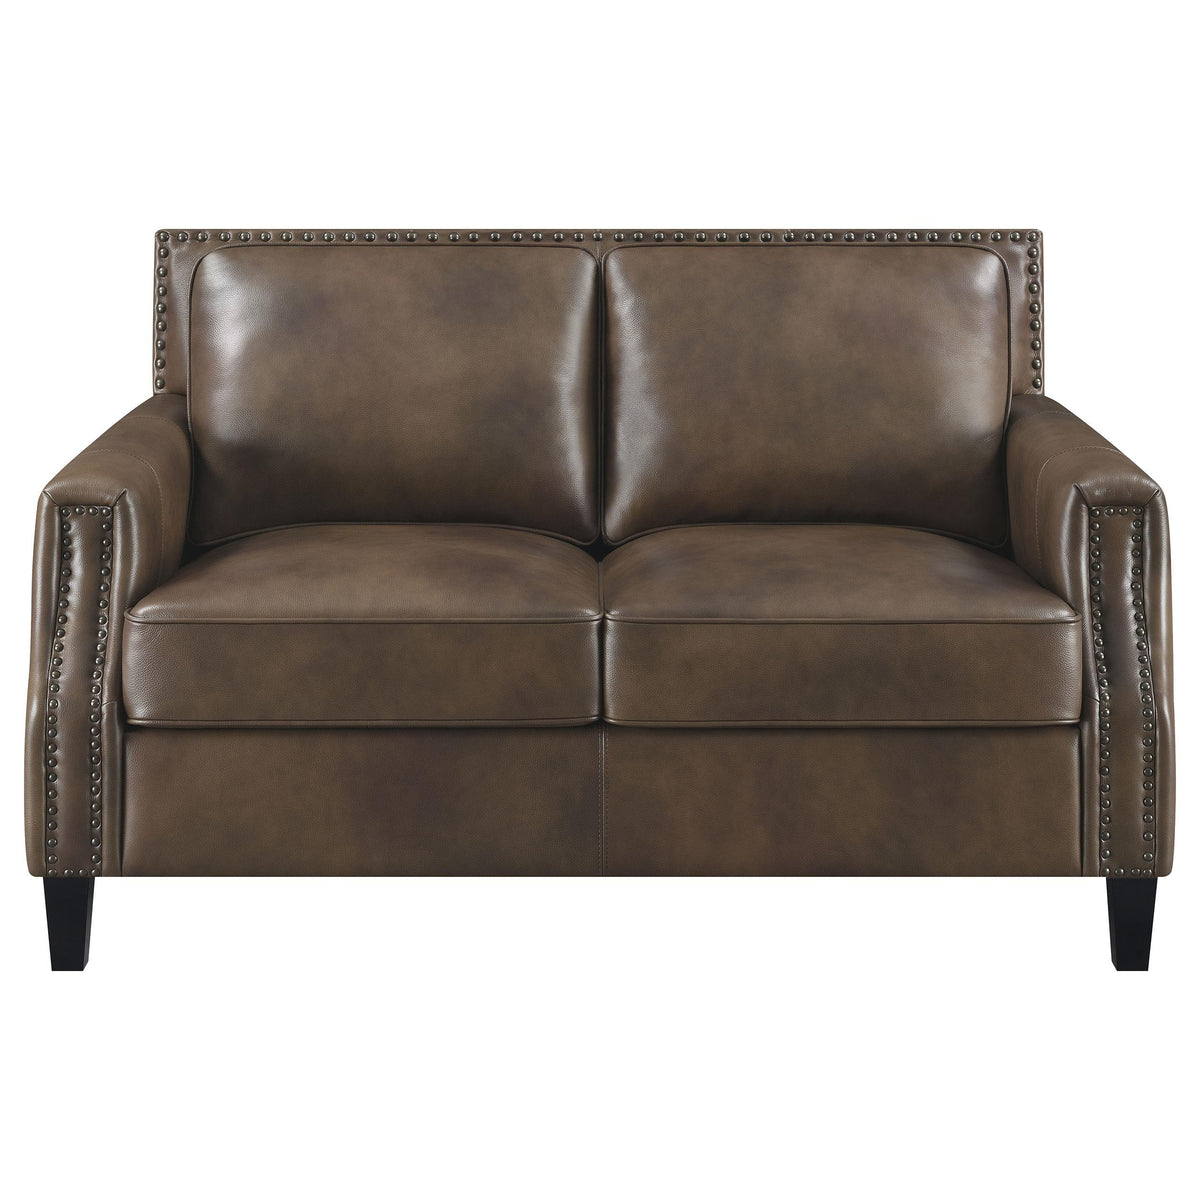 Leaton Upholstered Recessed Arms Loveseat Brown Sugar  Half Price Furniture